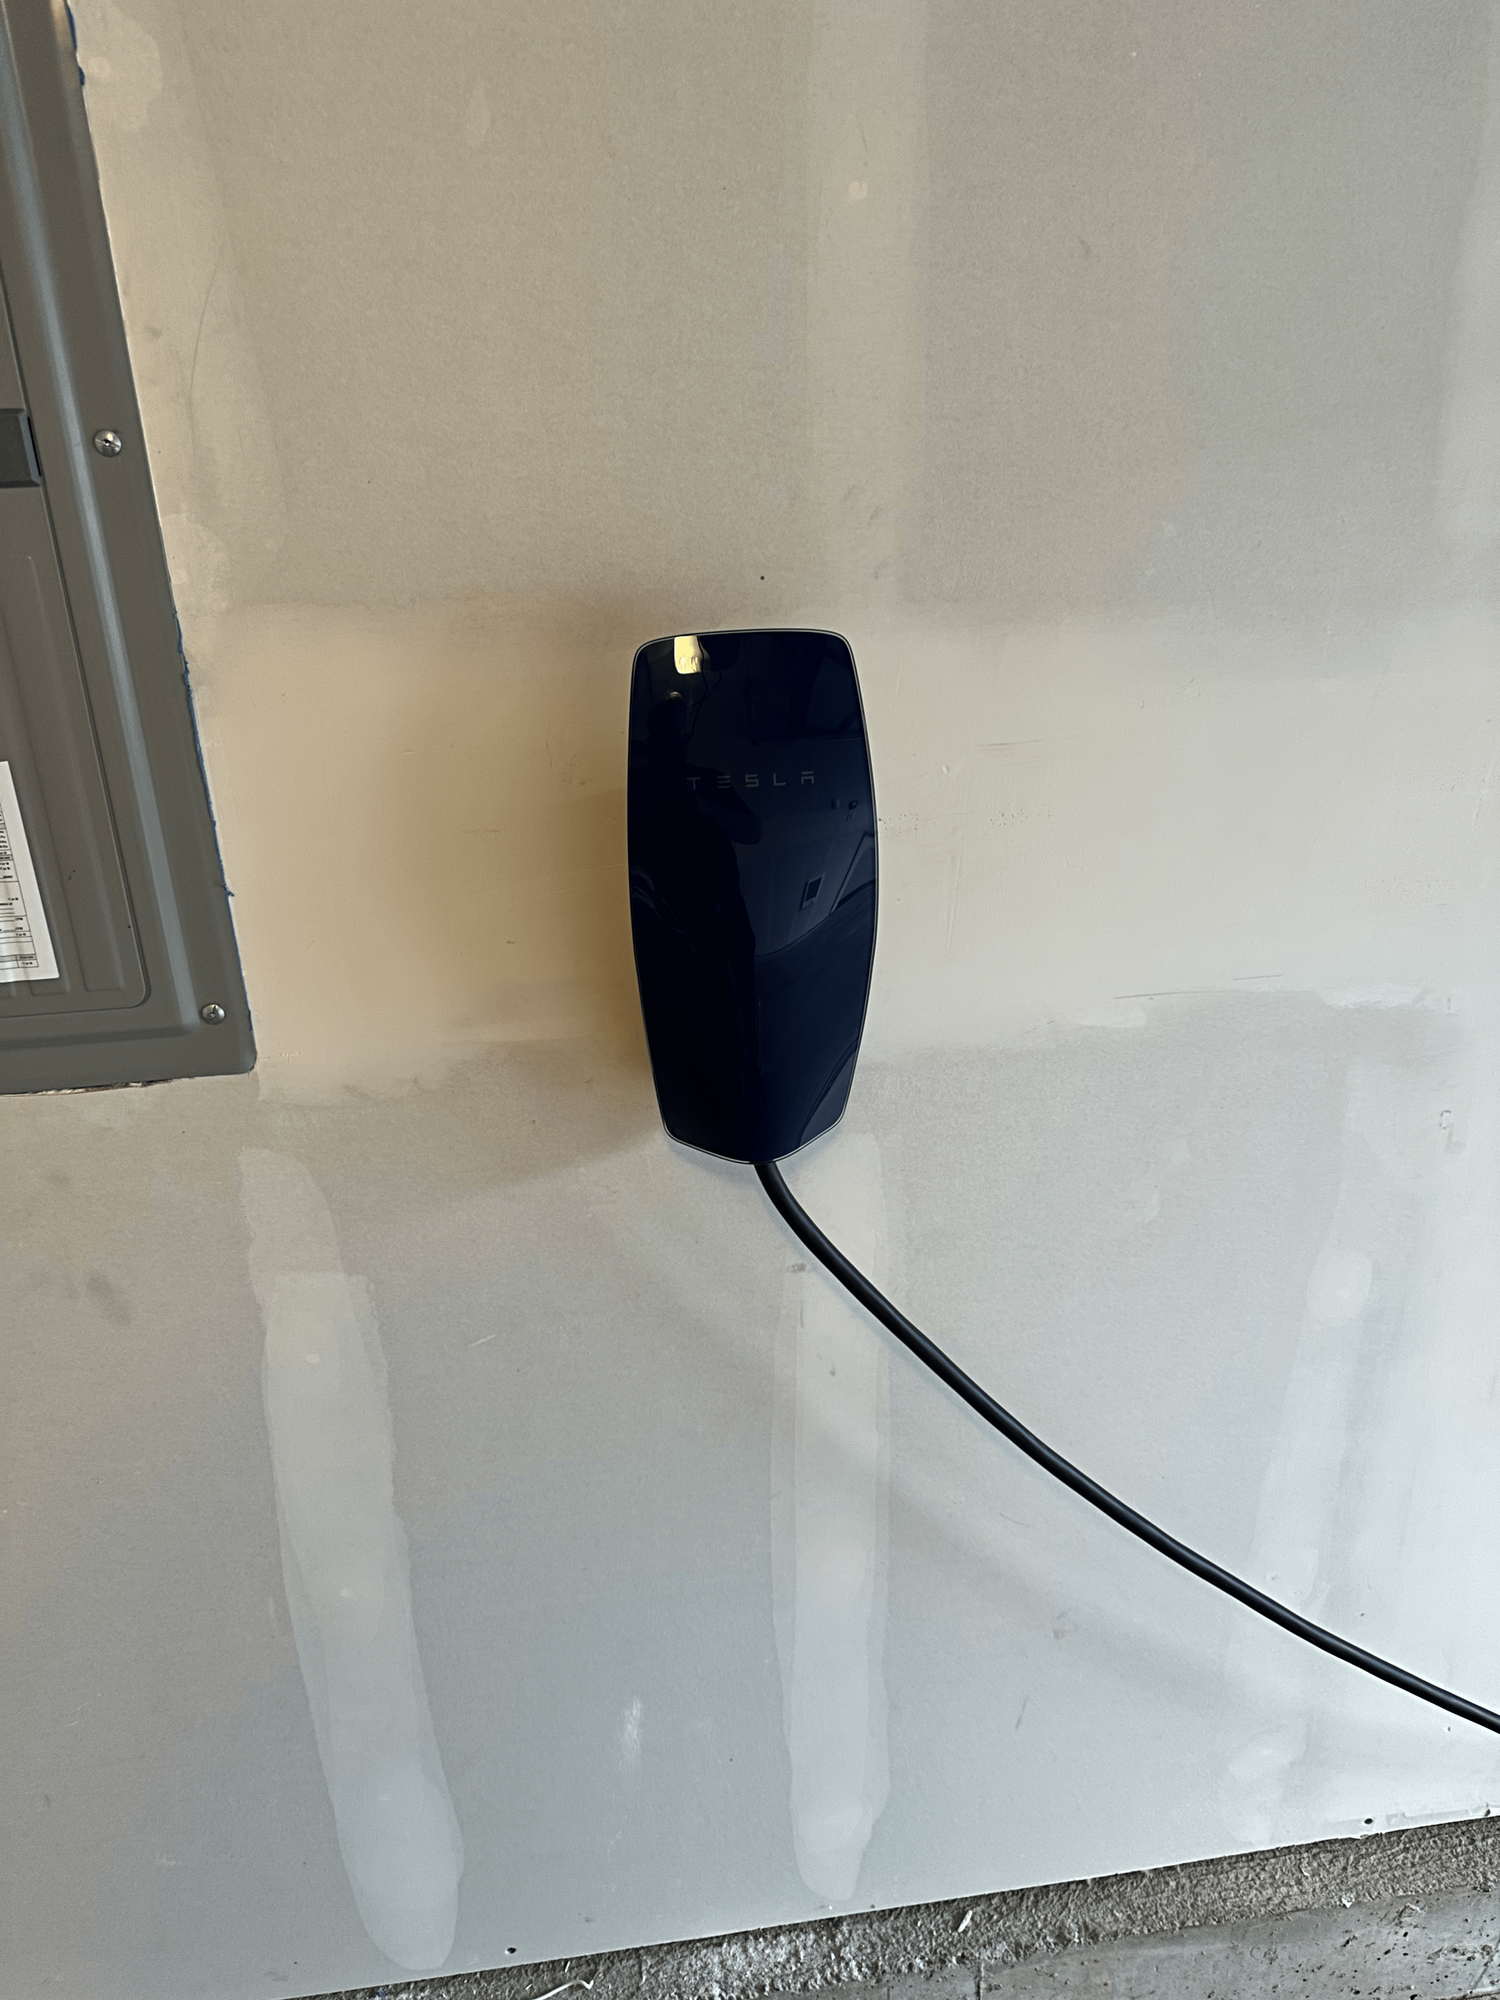 Tesla Wall charger mounted on wall.